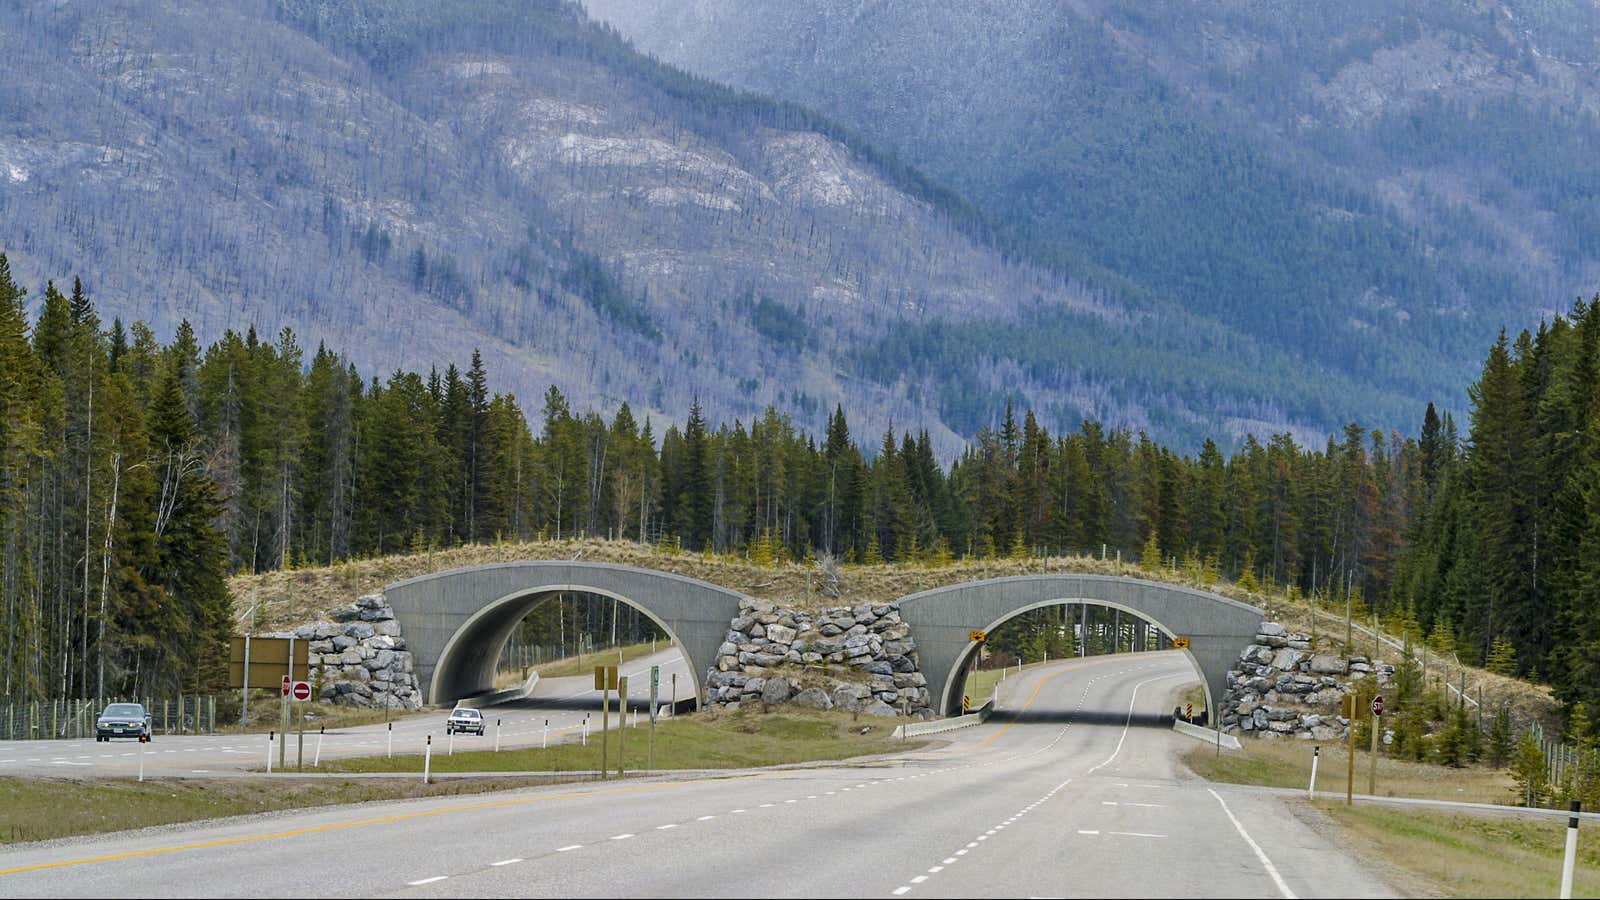 A wildlife crossing bridge in Banff National Park, Alberta, Canada.